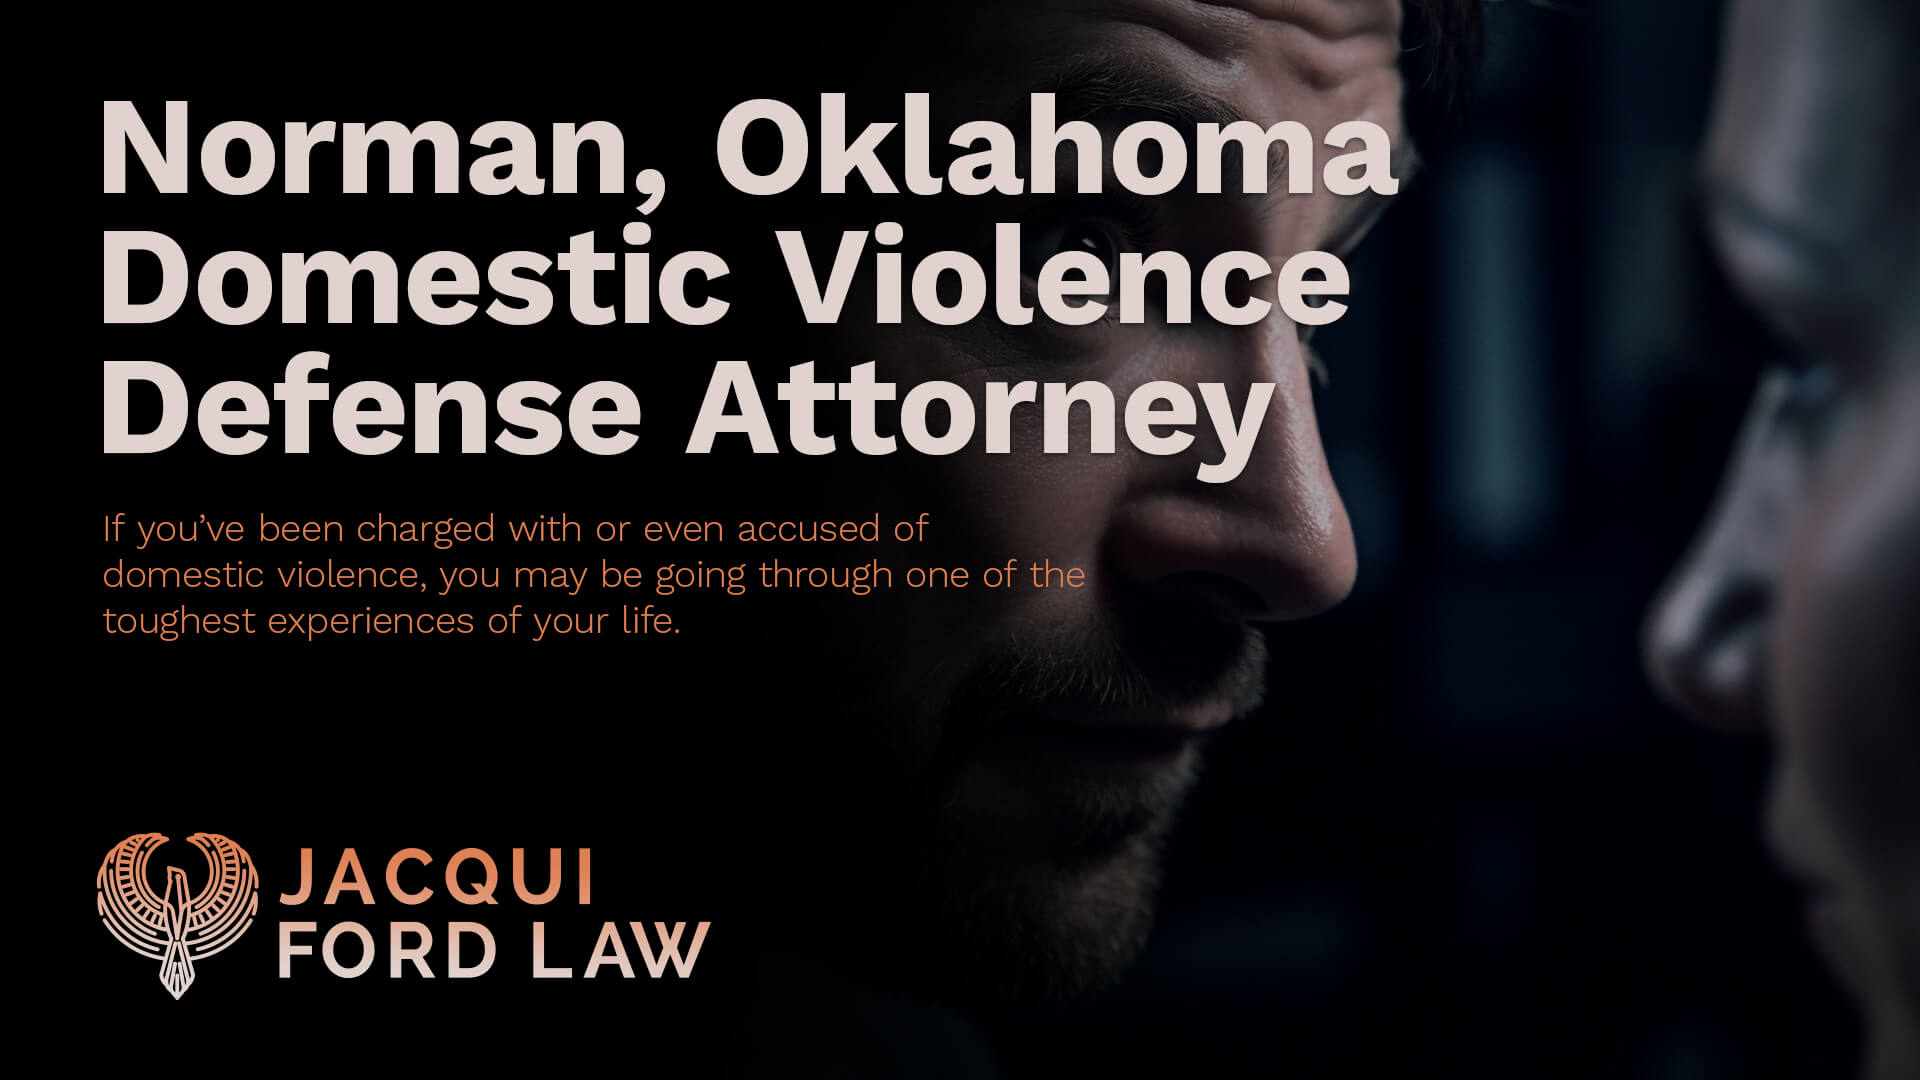 Norman Oklahoma Domestic Violence Defense Attorney - jacqui ford law